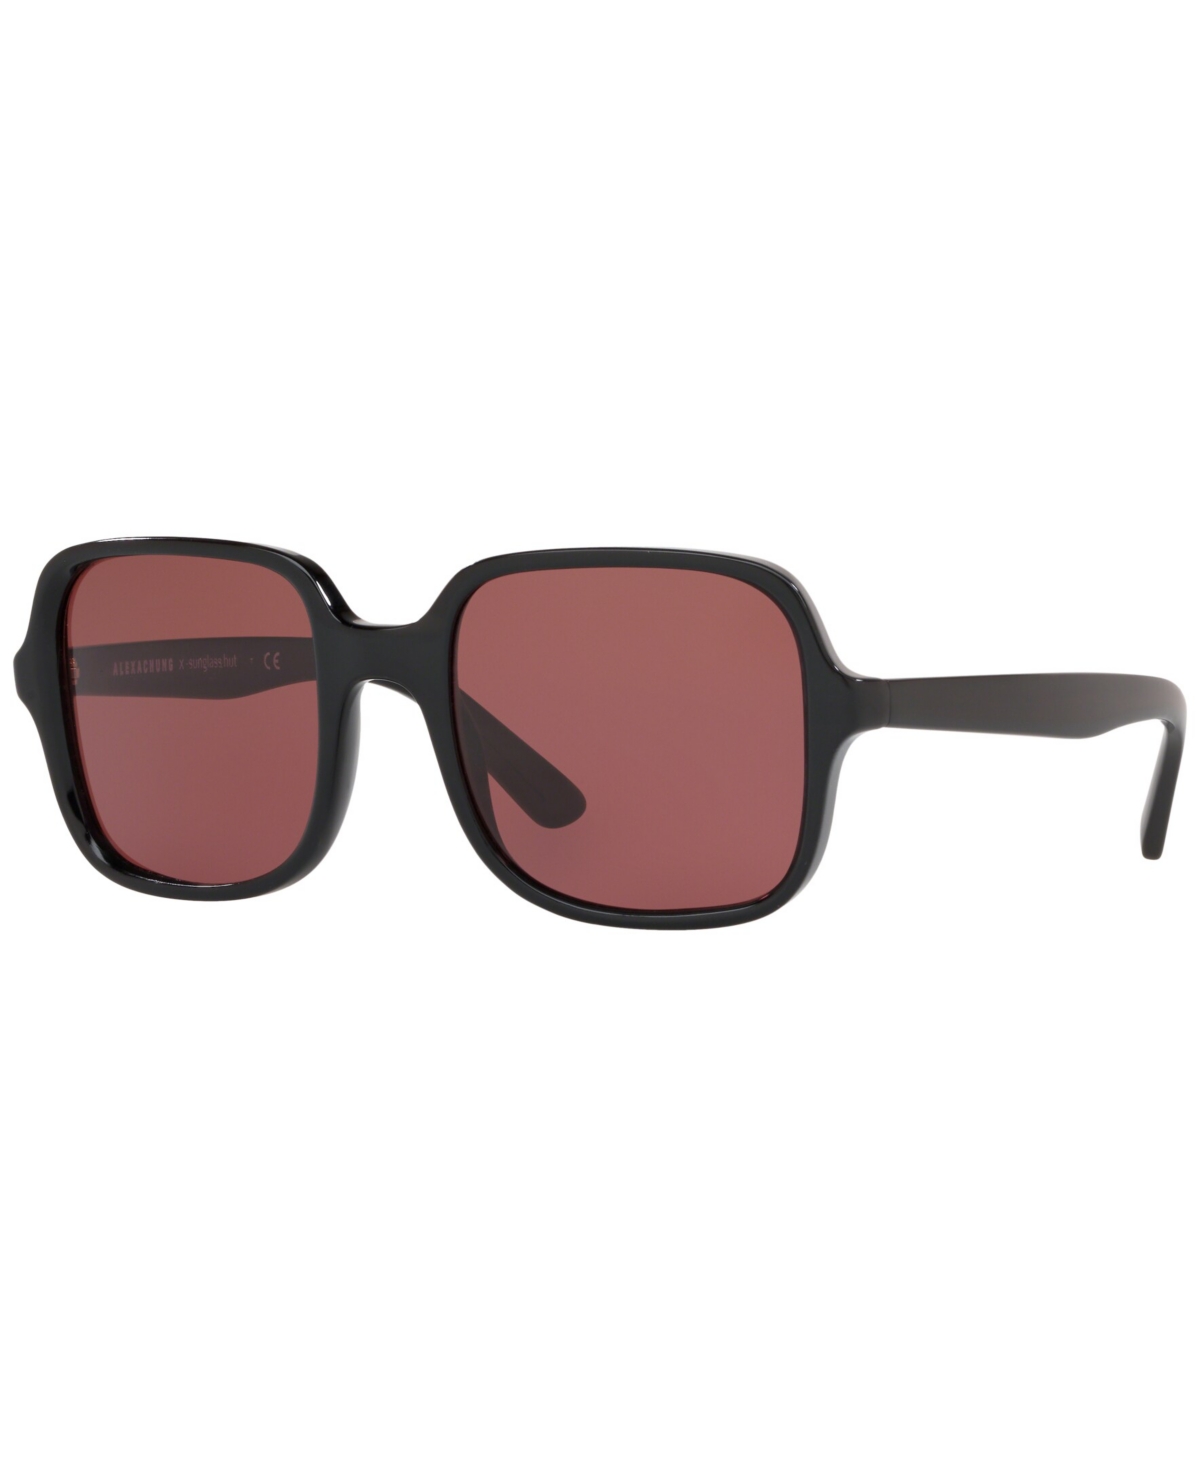 Sunglass Hut Collection Women's Sunglasses, Hu4005 In Black